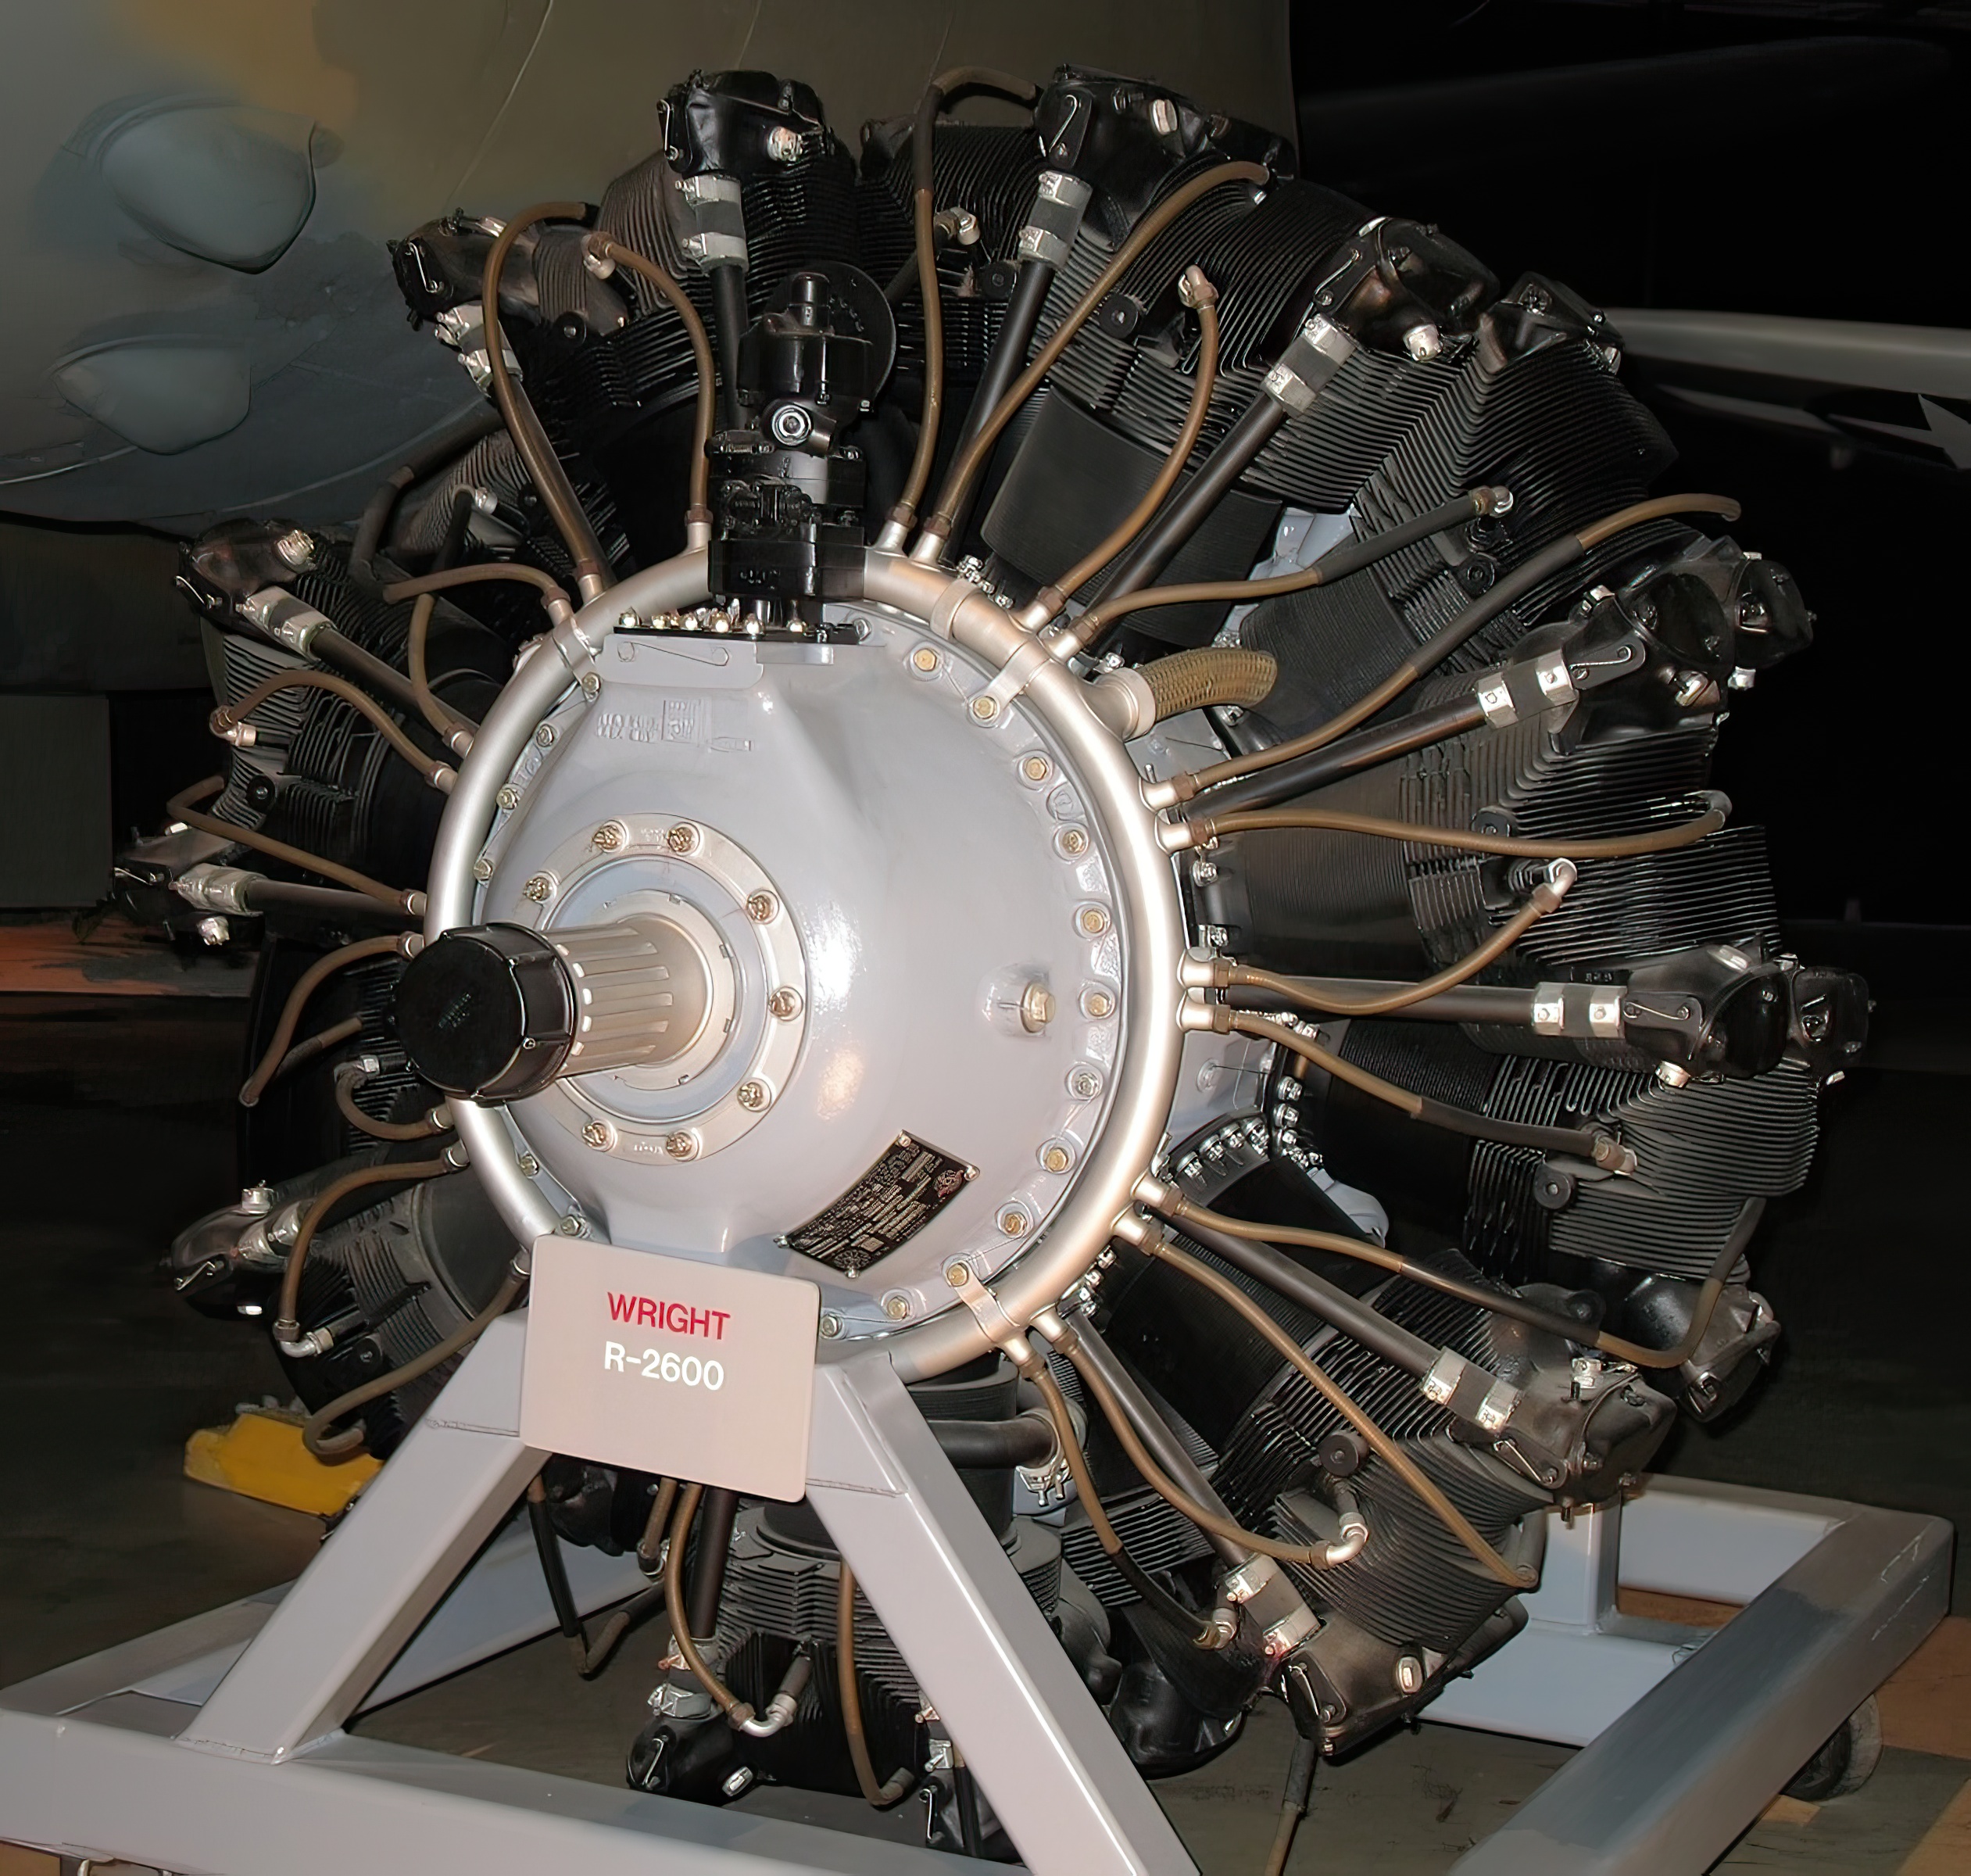 Wright R-2600 engine